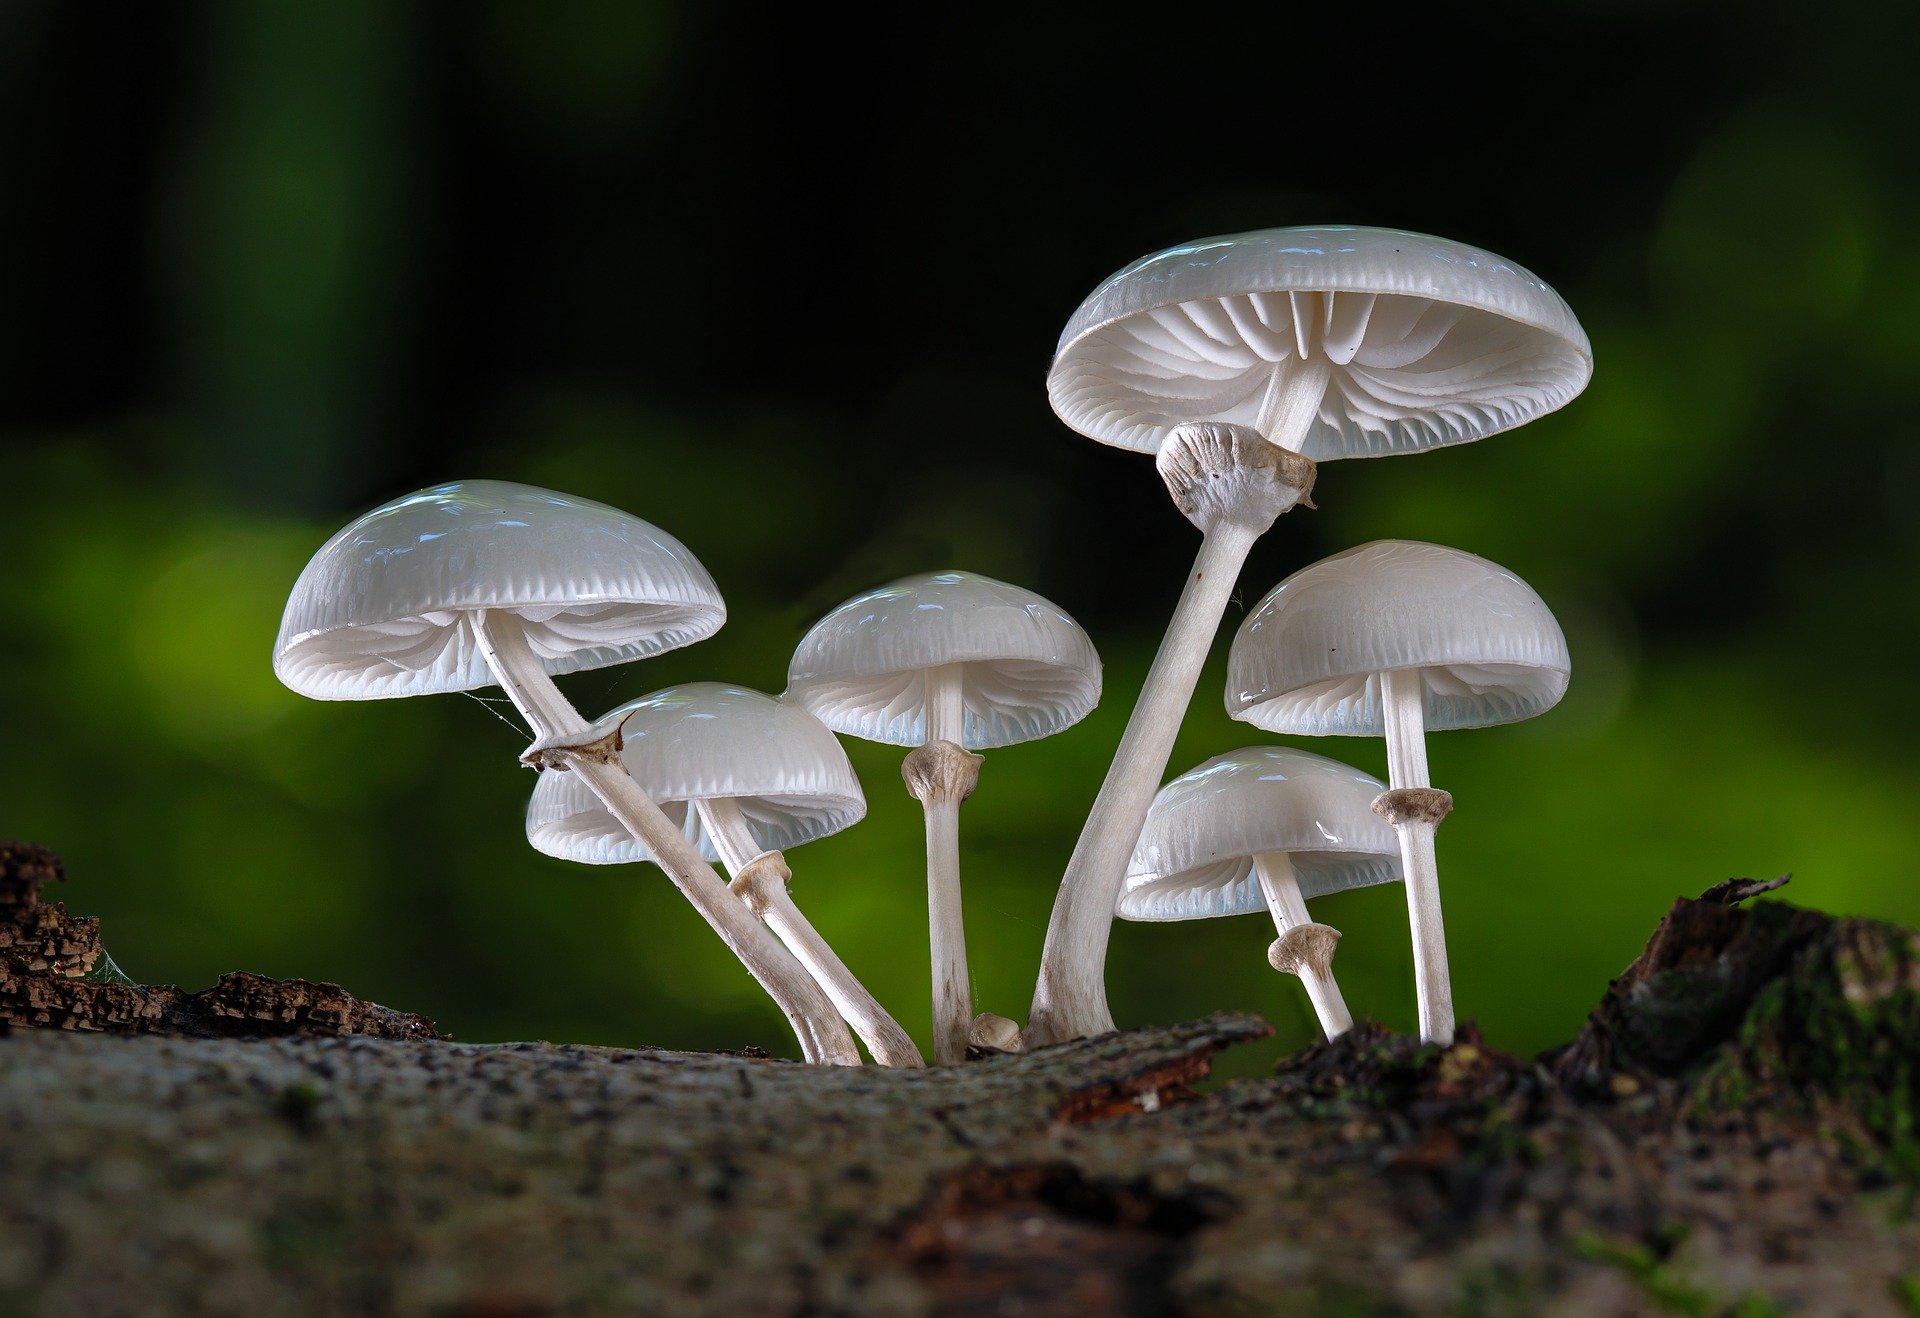 fungi characteristics and function